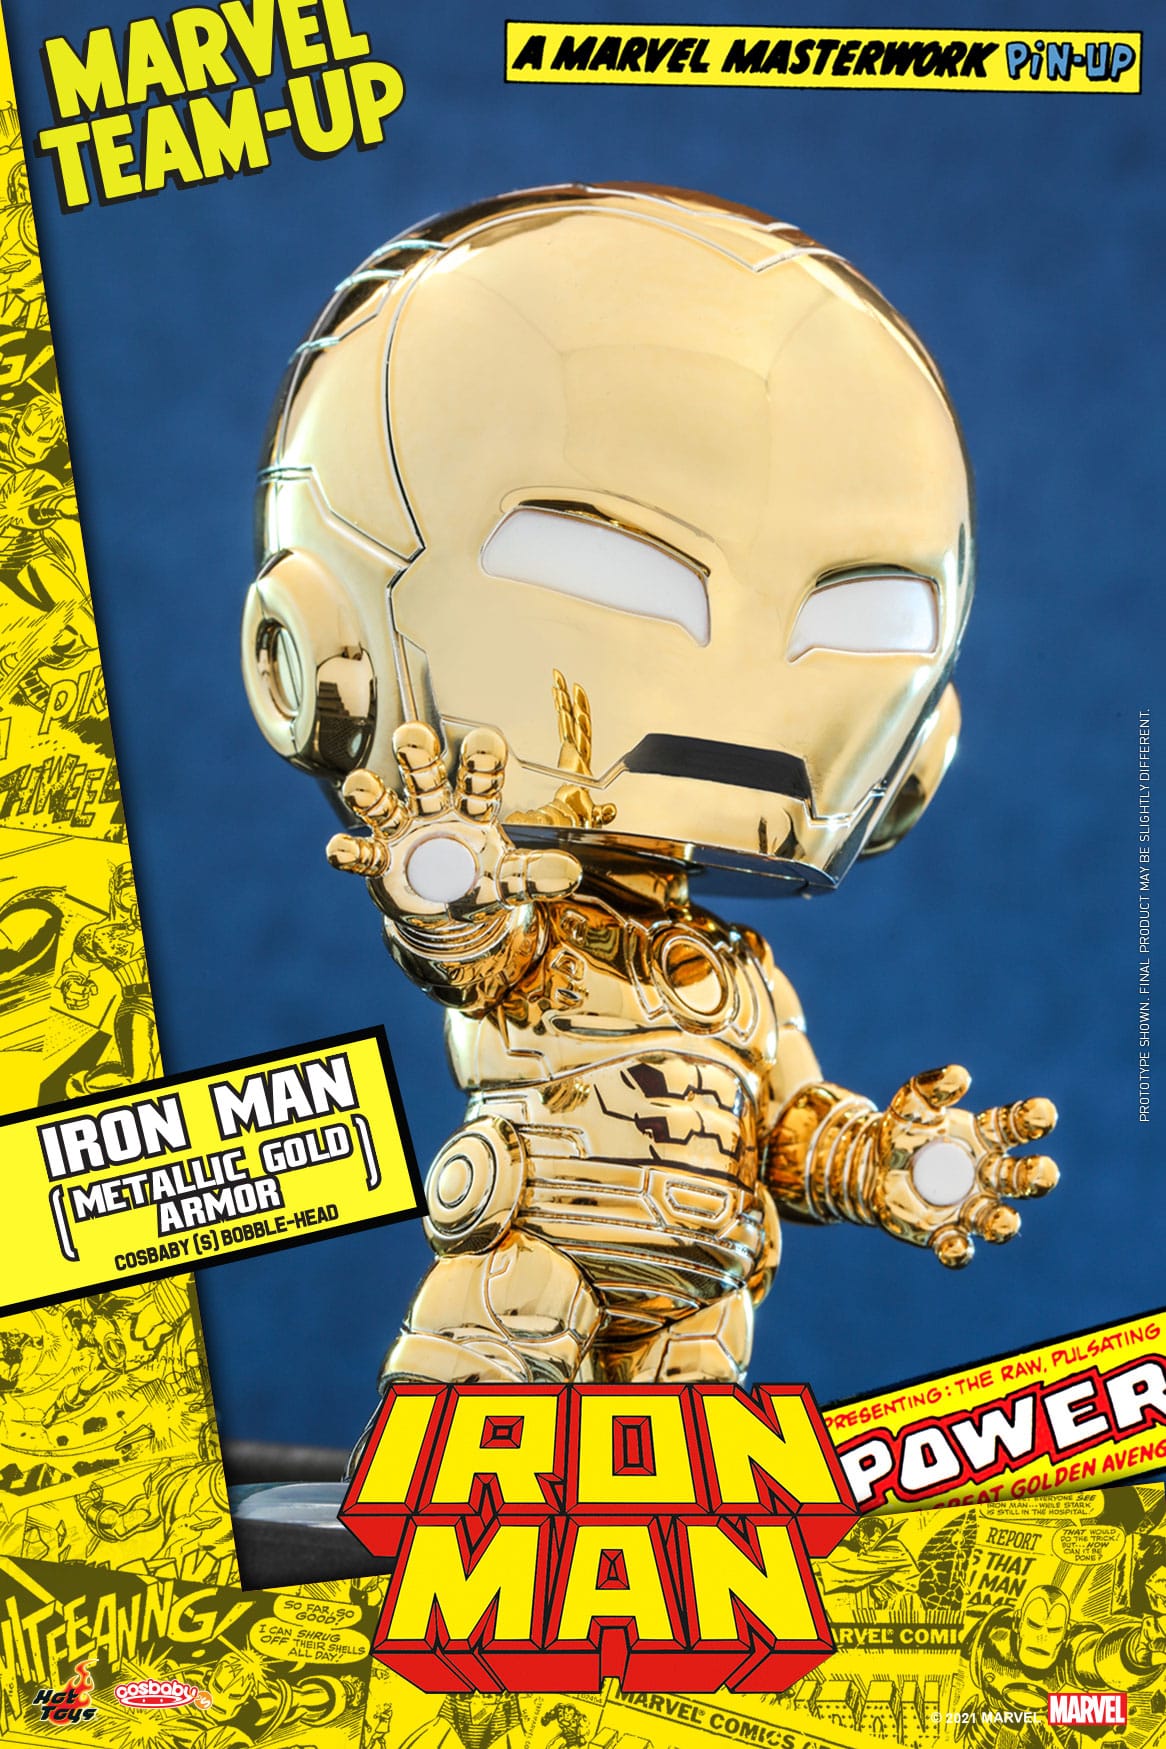 Iron Man (Metallic Gold Armour) Cosbaby